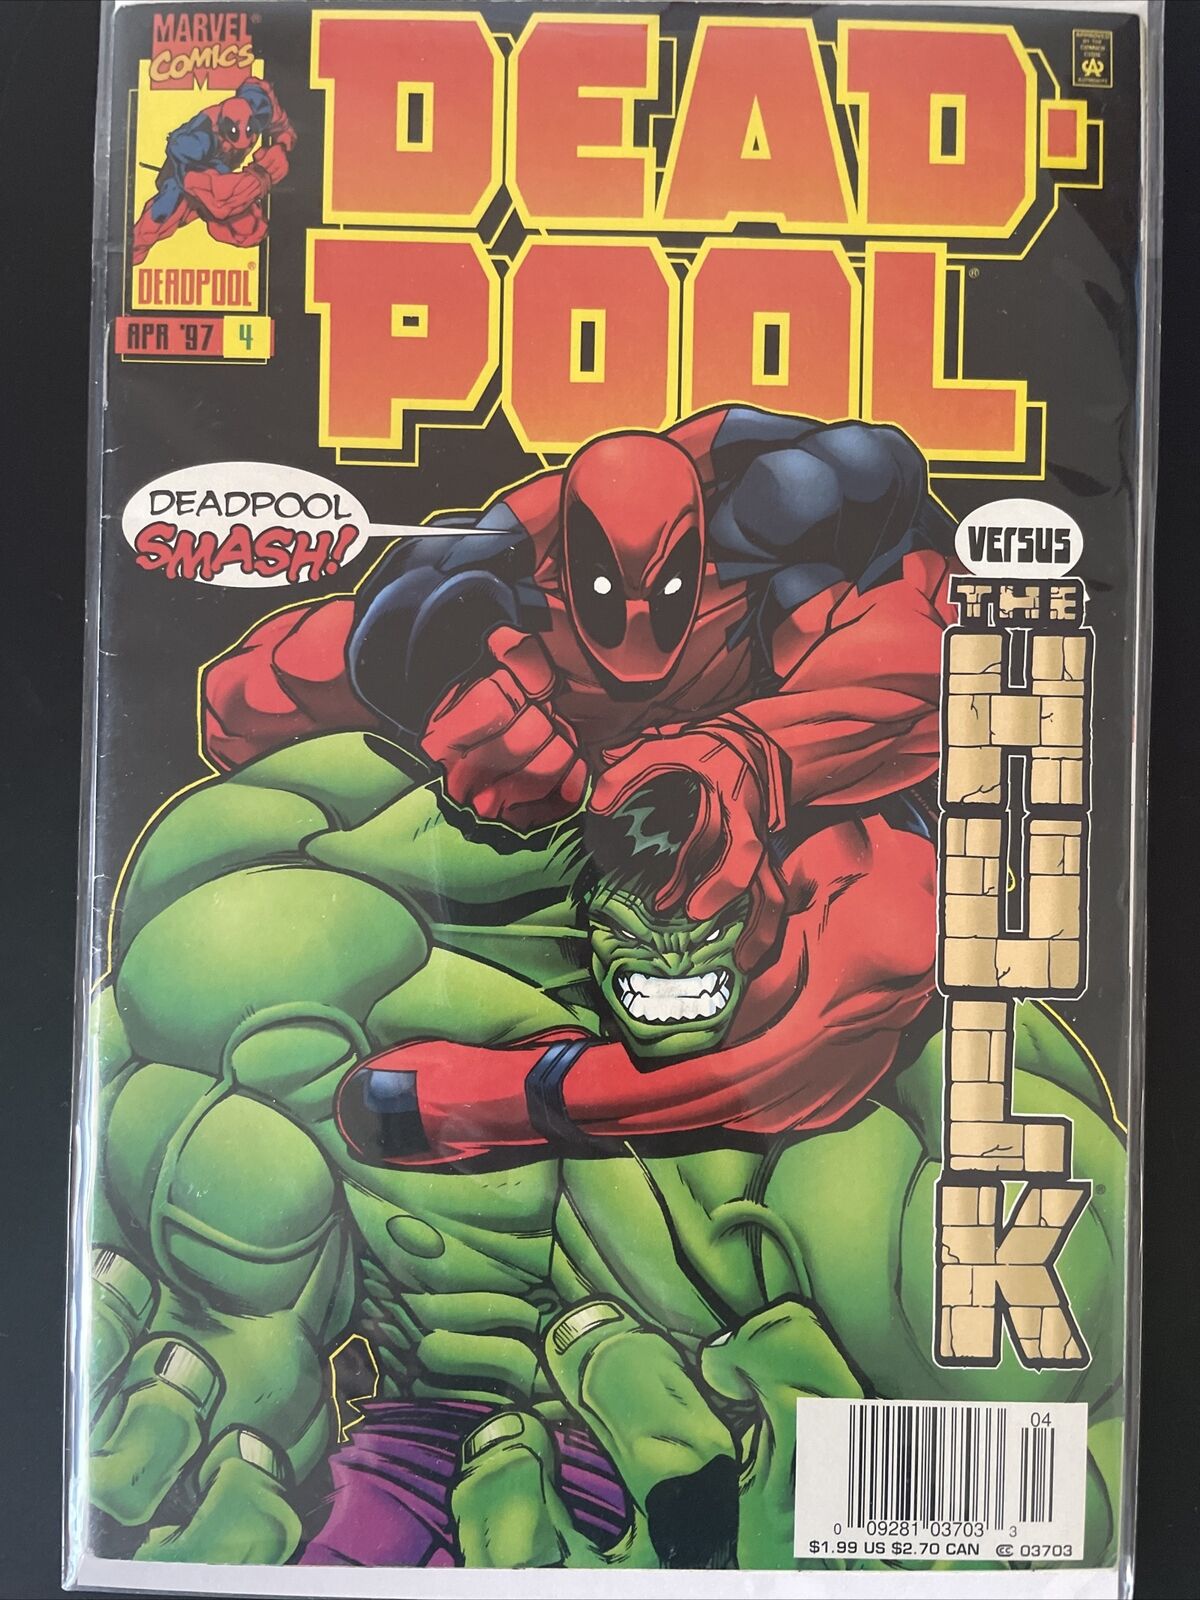 Deadpool #4 (Marvel) Vs. The Hulk - Newsstand Edition